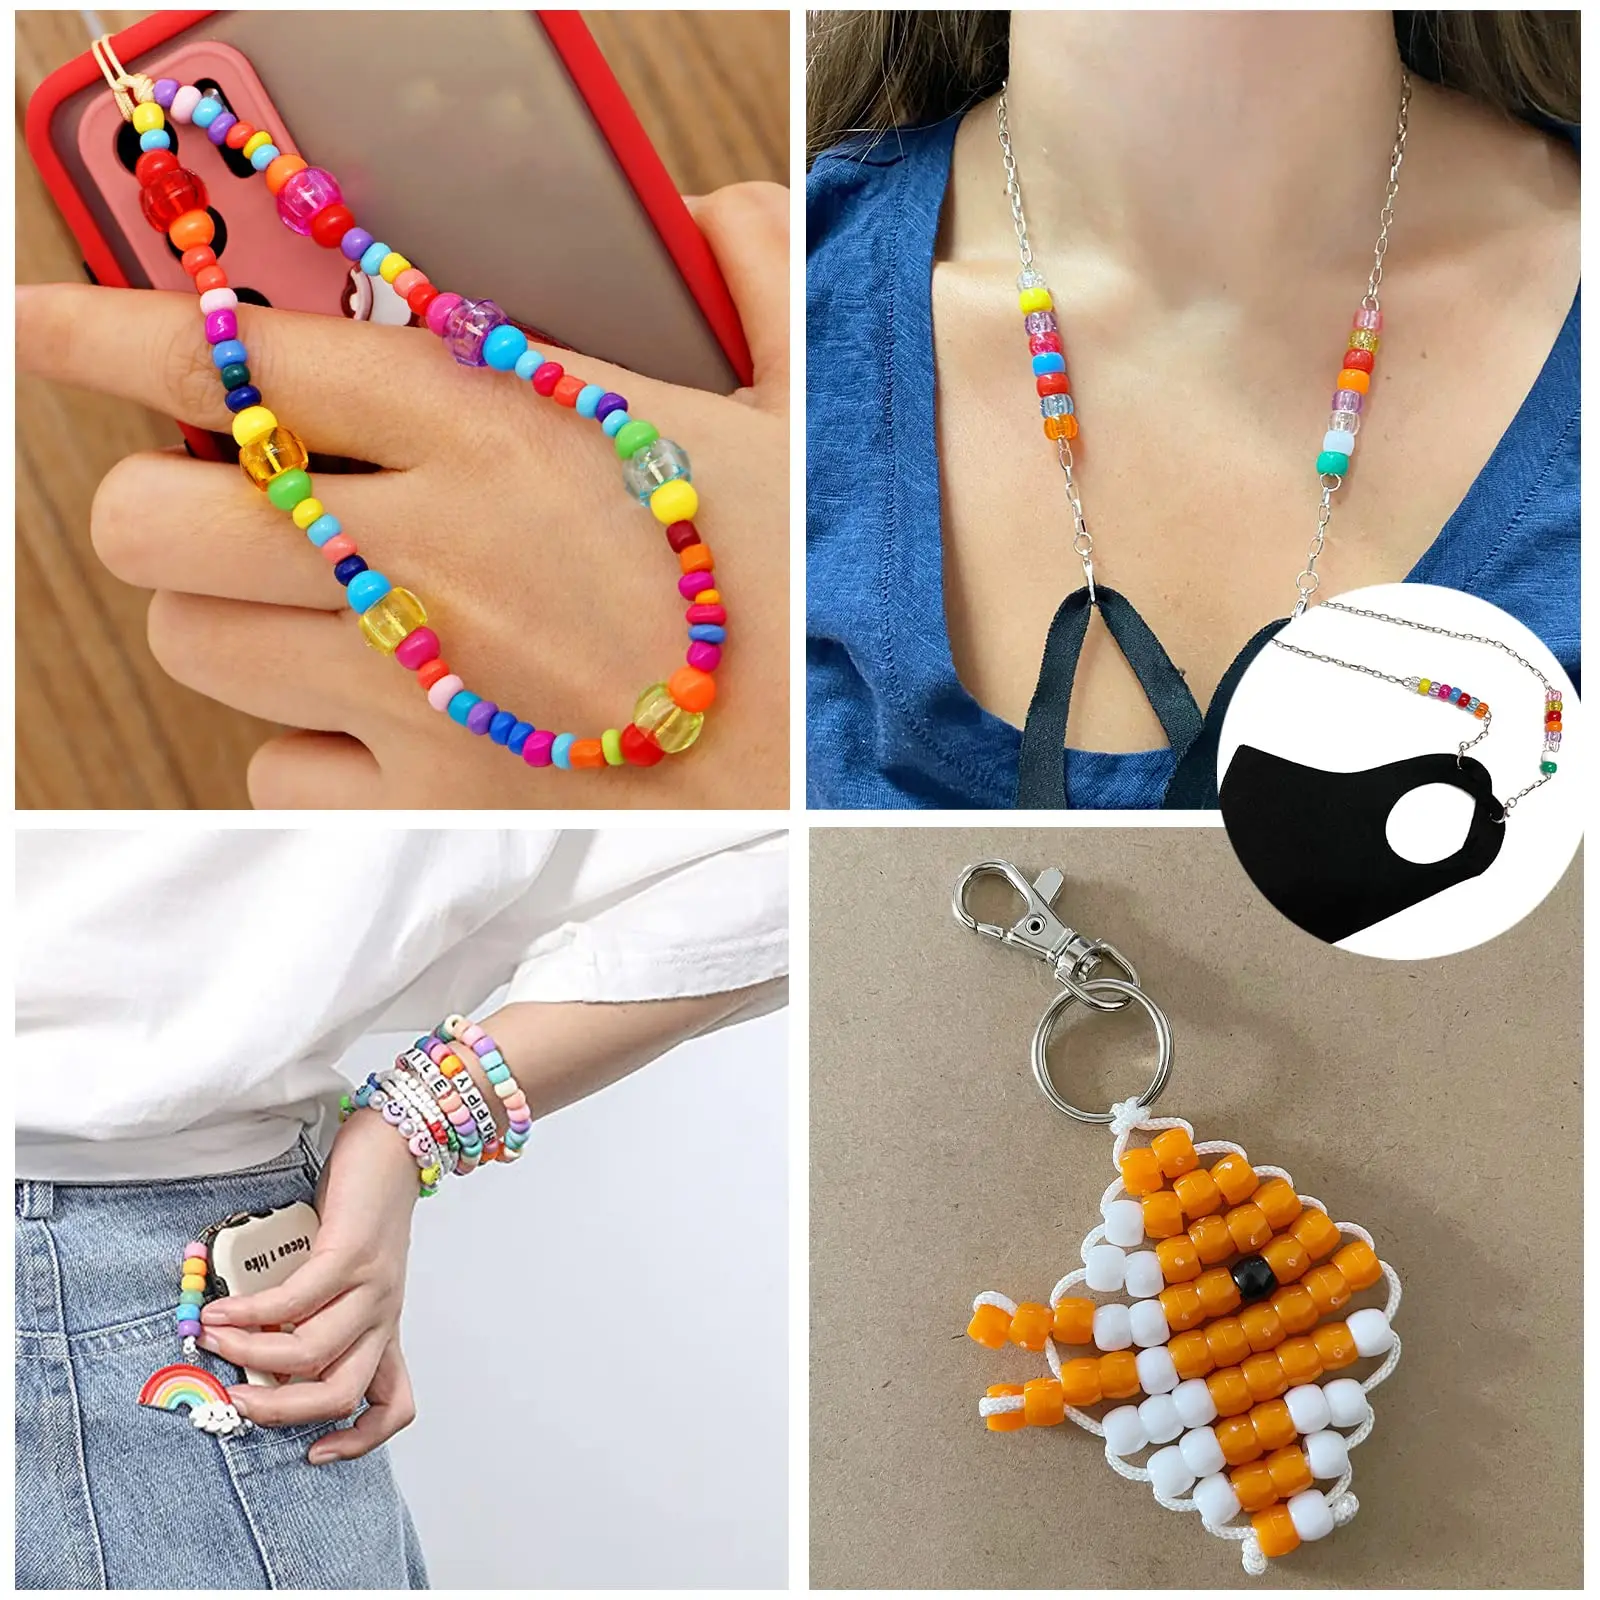 Pony Beads Multi-Colored Plastic Craft Beads Set Bulk Rainbow Hair Beads for DIY Crafting Jewelry Making Kandi Bracelets